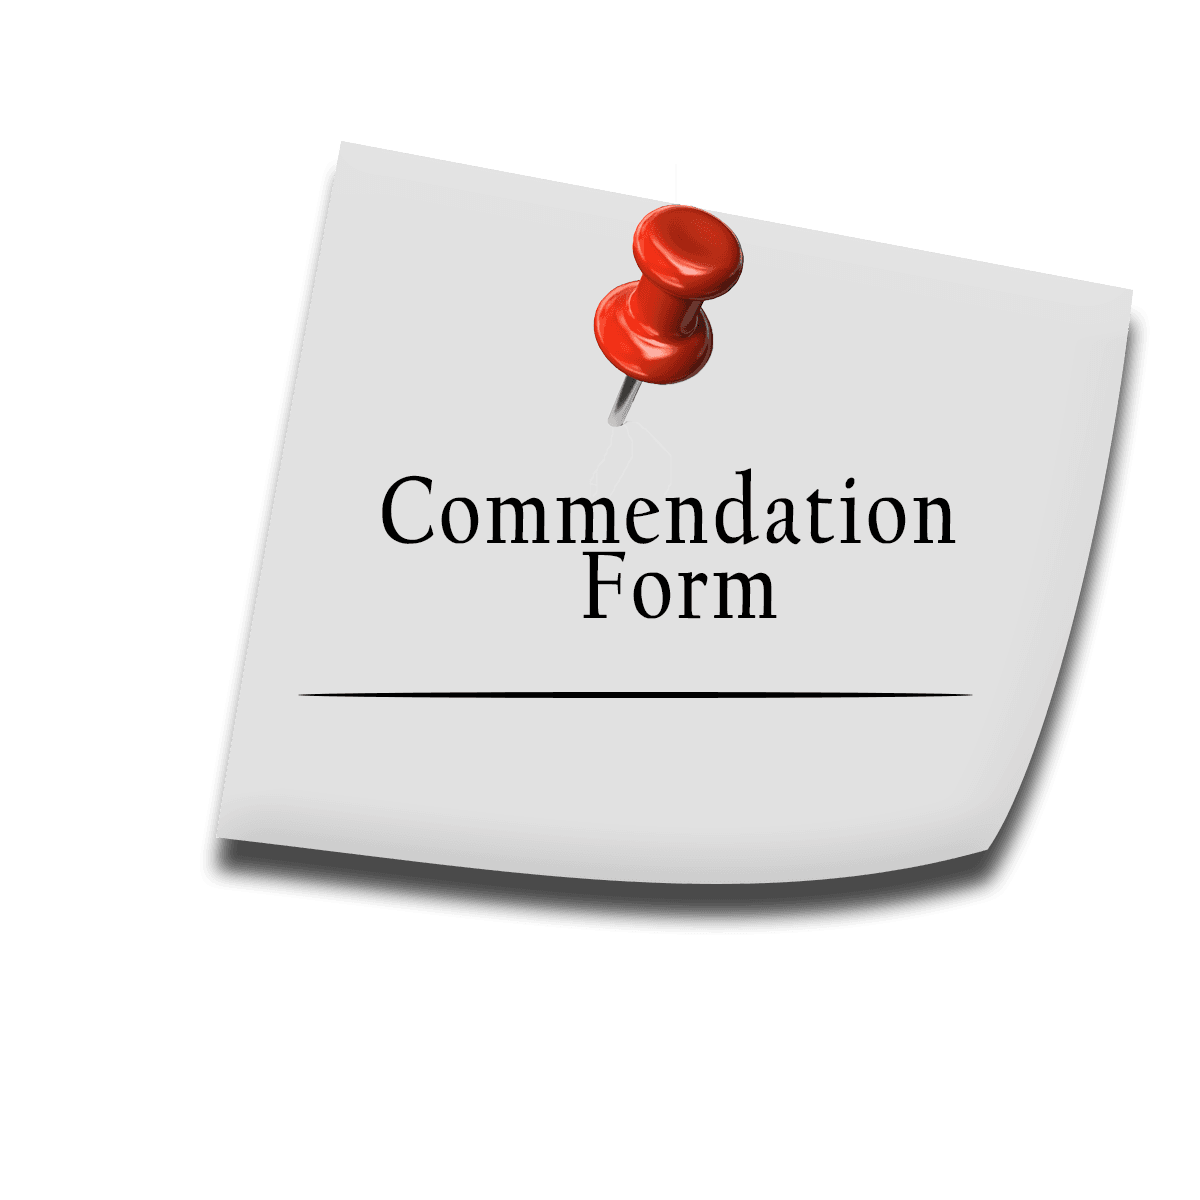 Commendation Form Graphic